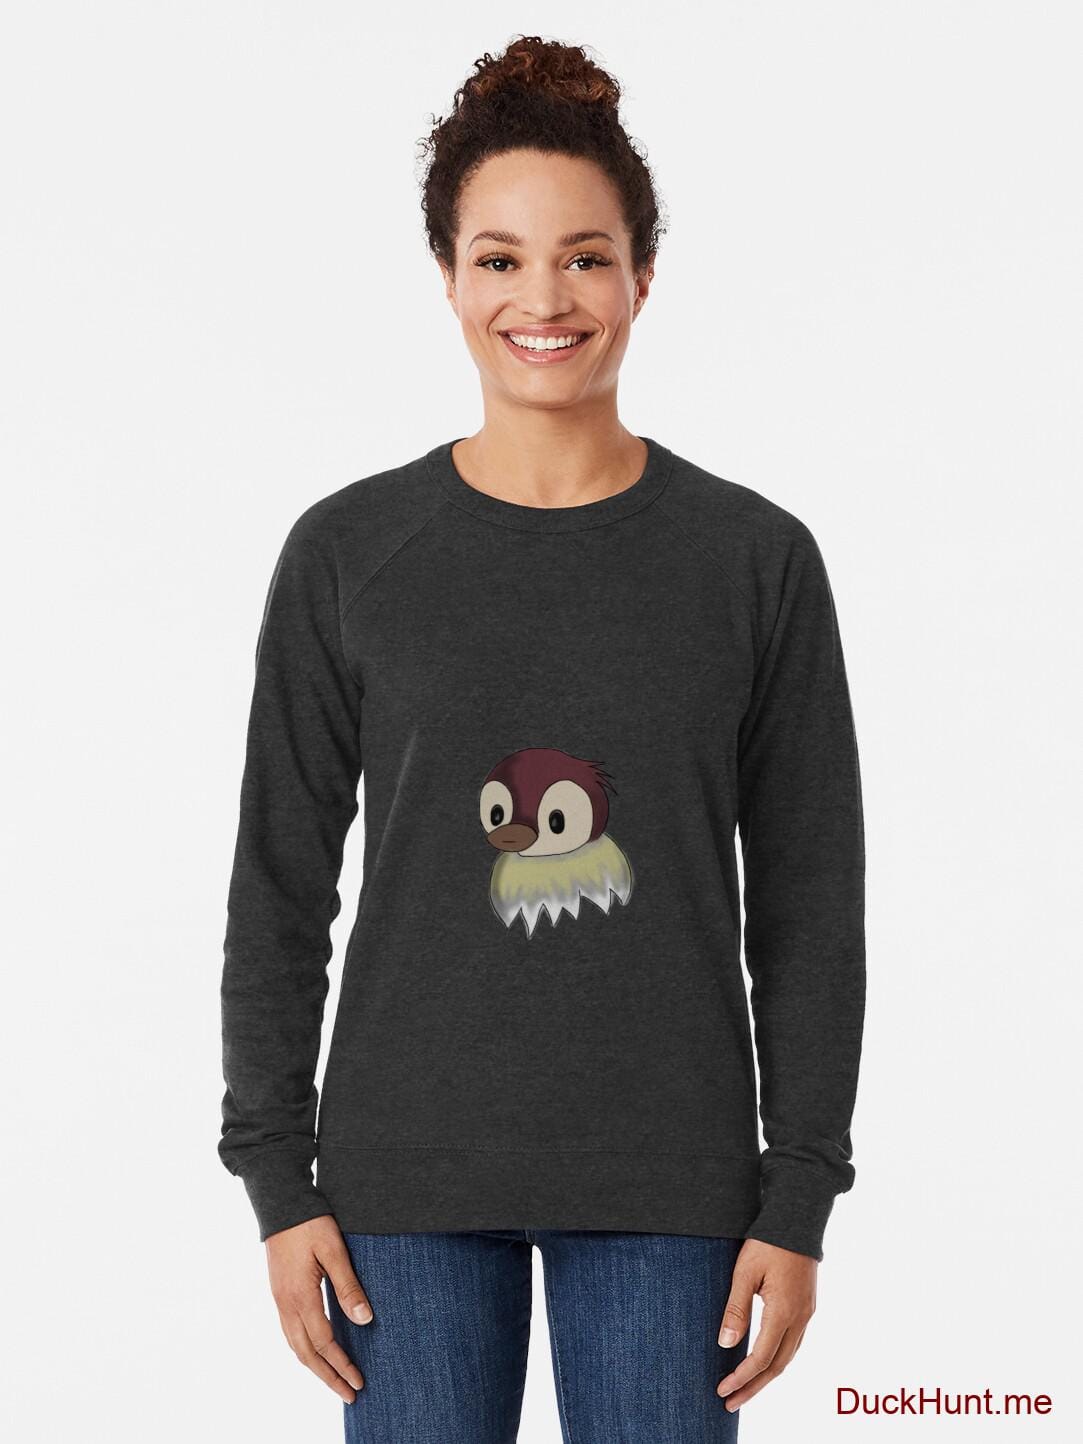 Ghost Duck (fogless) Charcoal Lightweight Sweatshirt alternative image 1